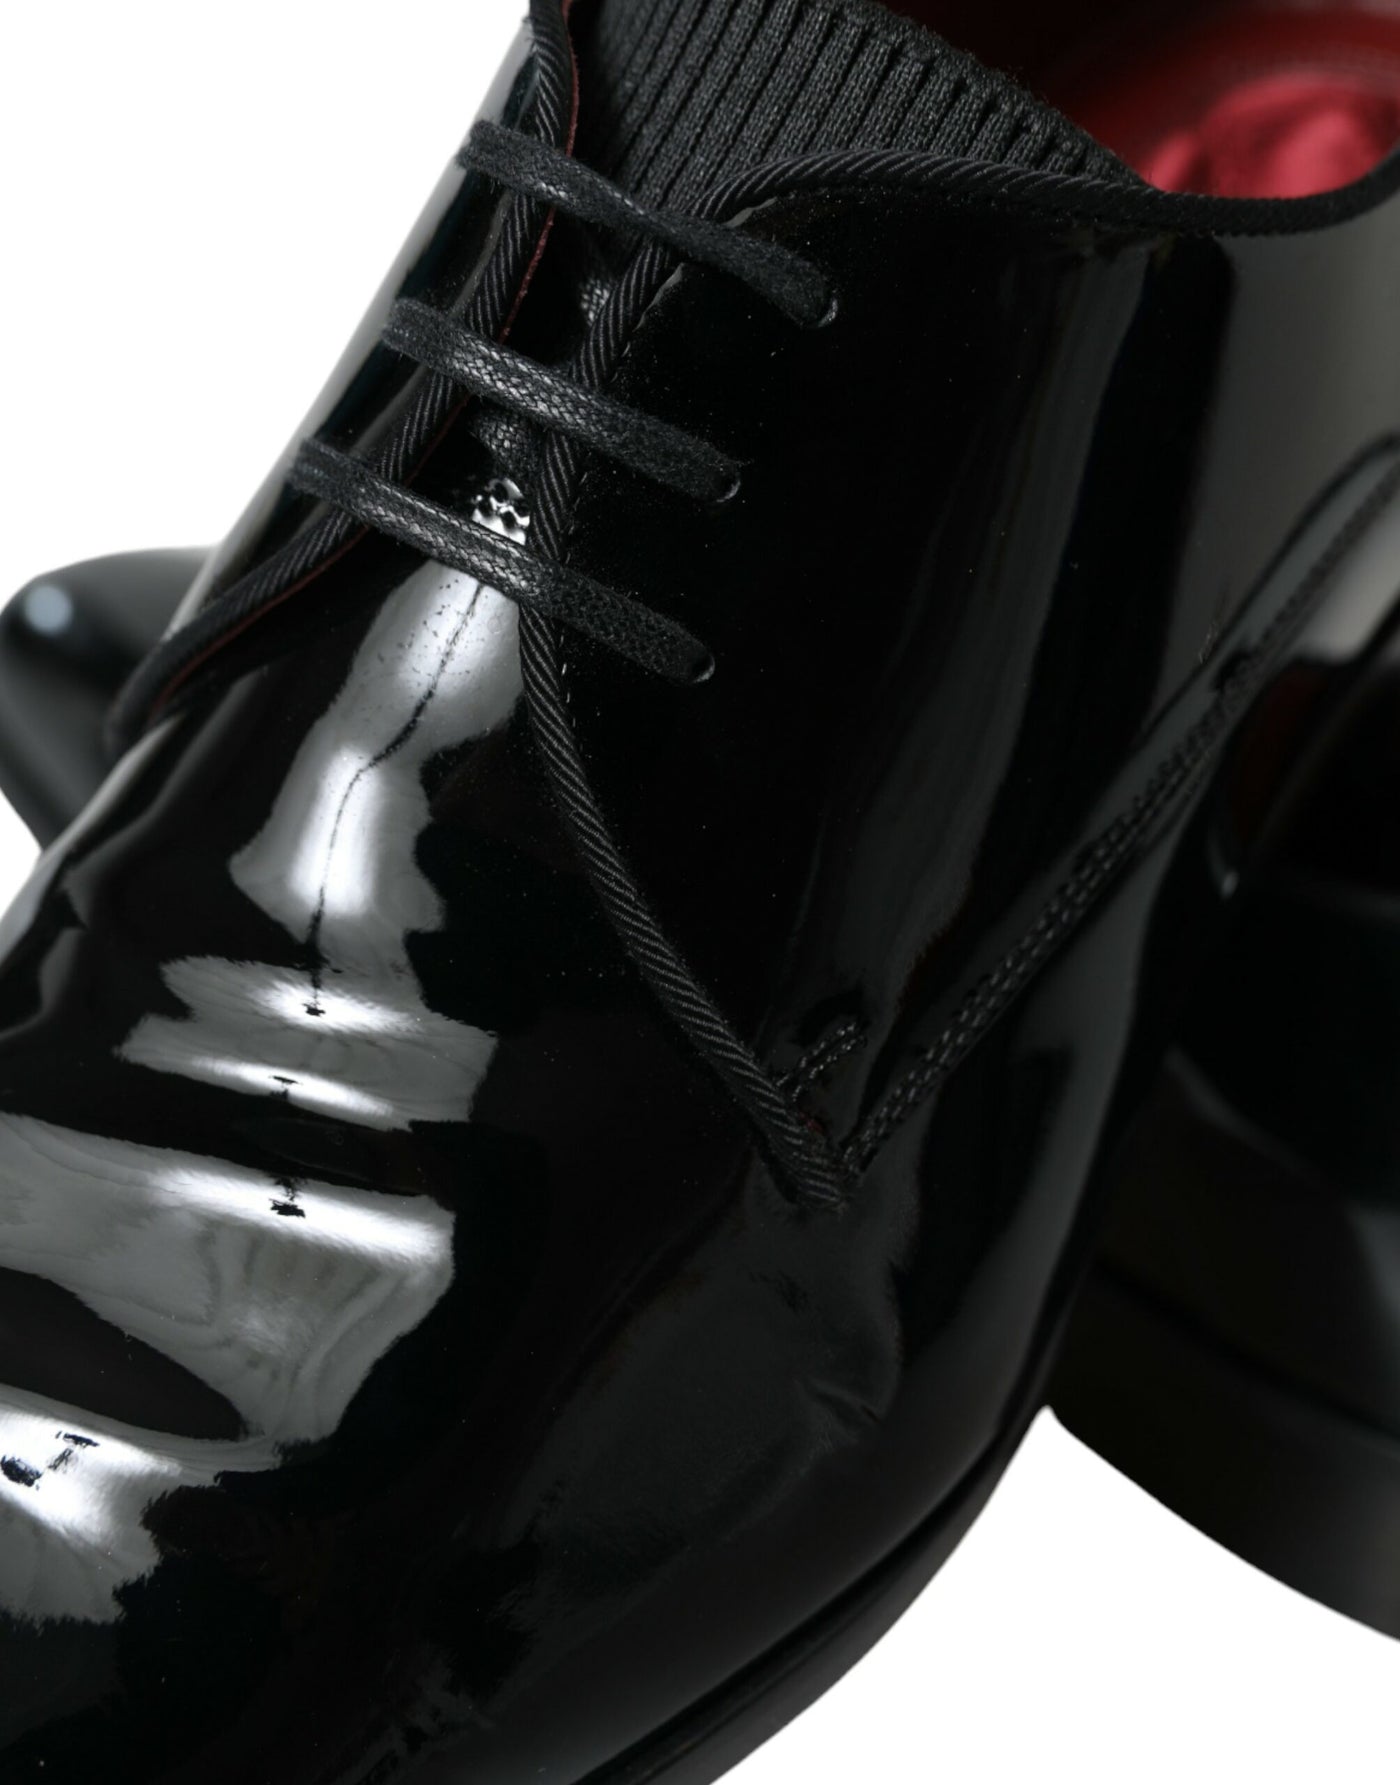 Dolce & Gabbana Black Calfskin Leather Derby Dress Shoes